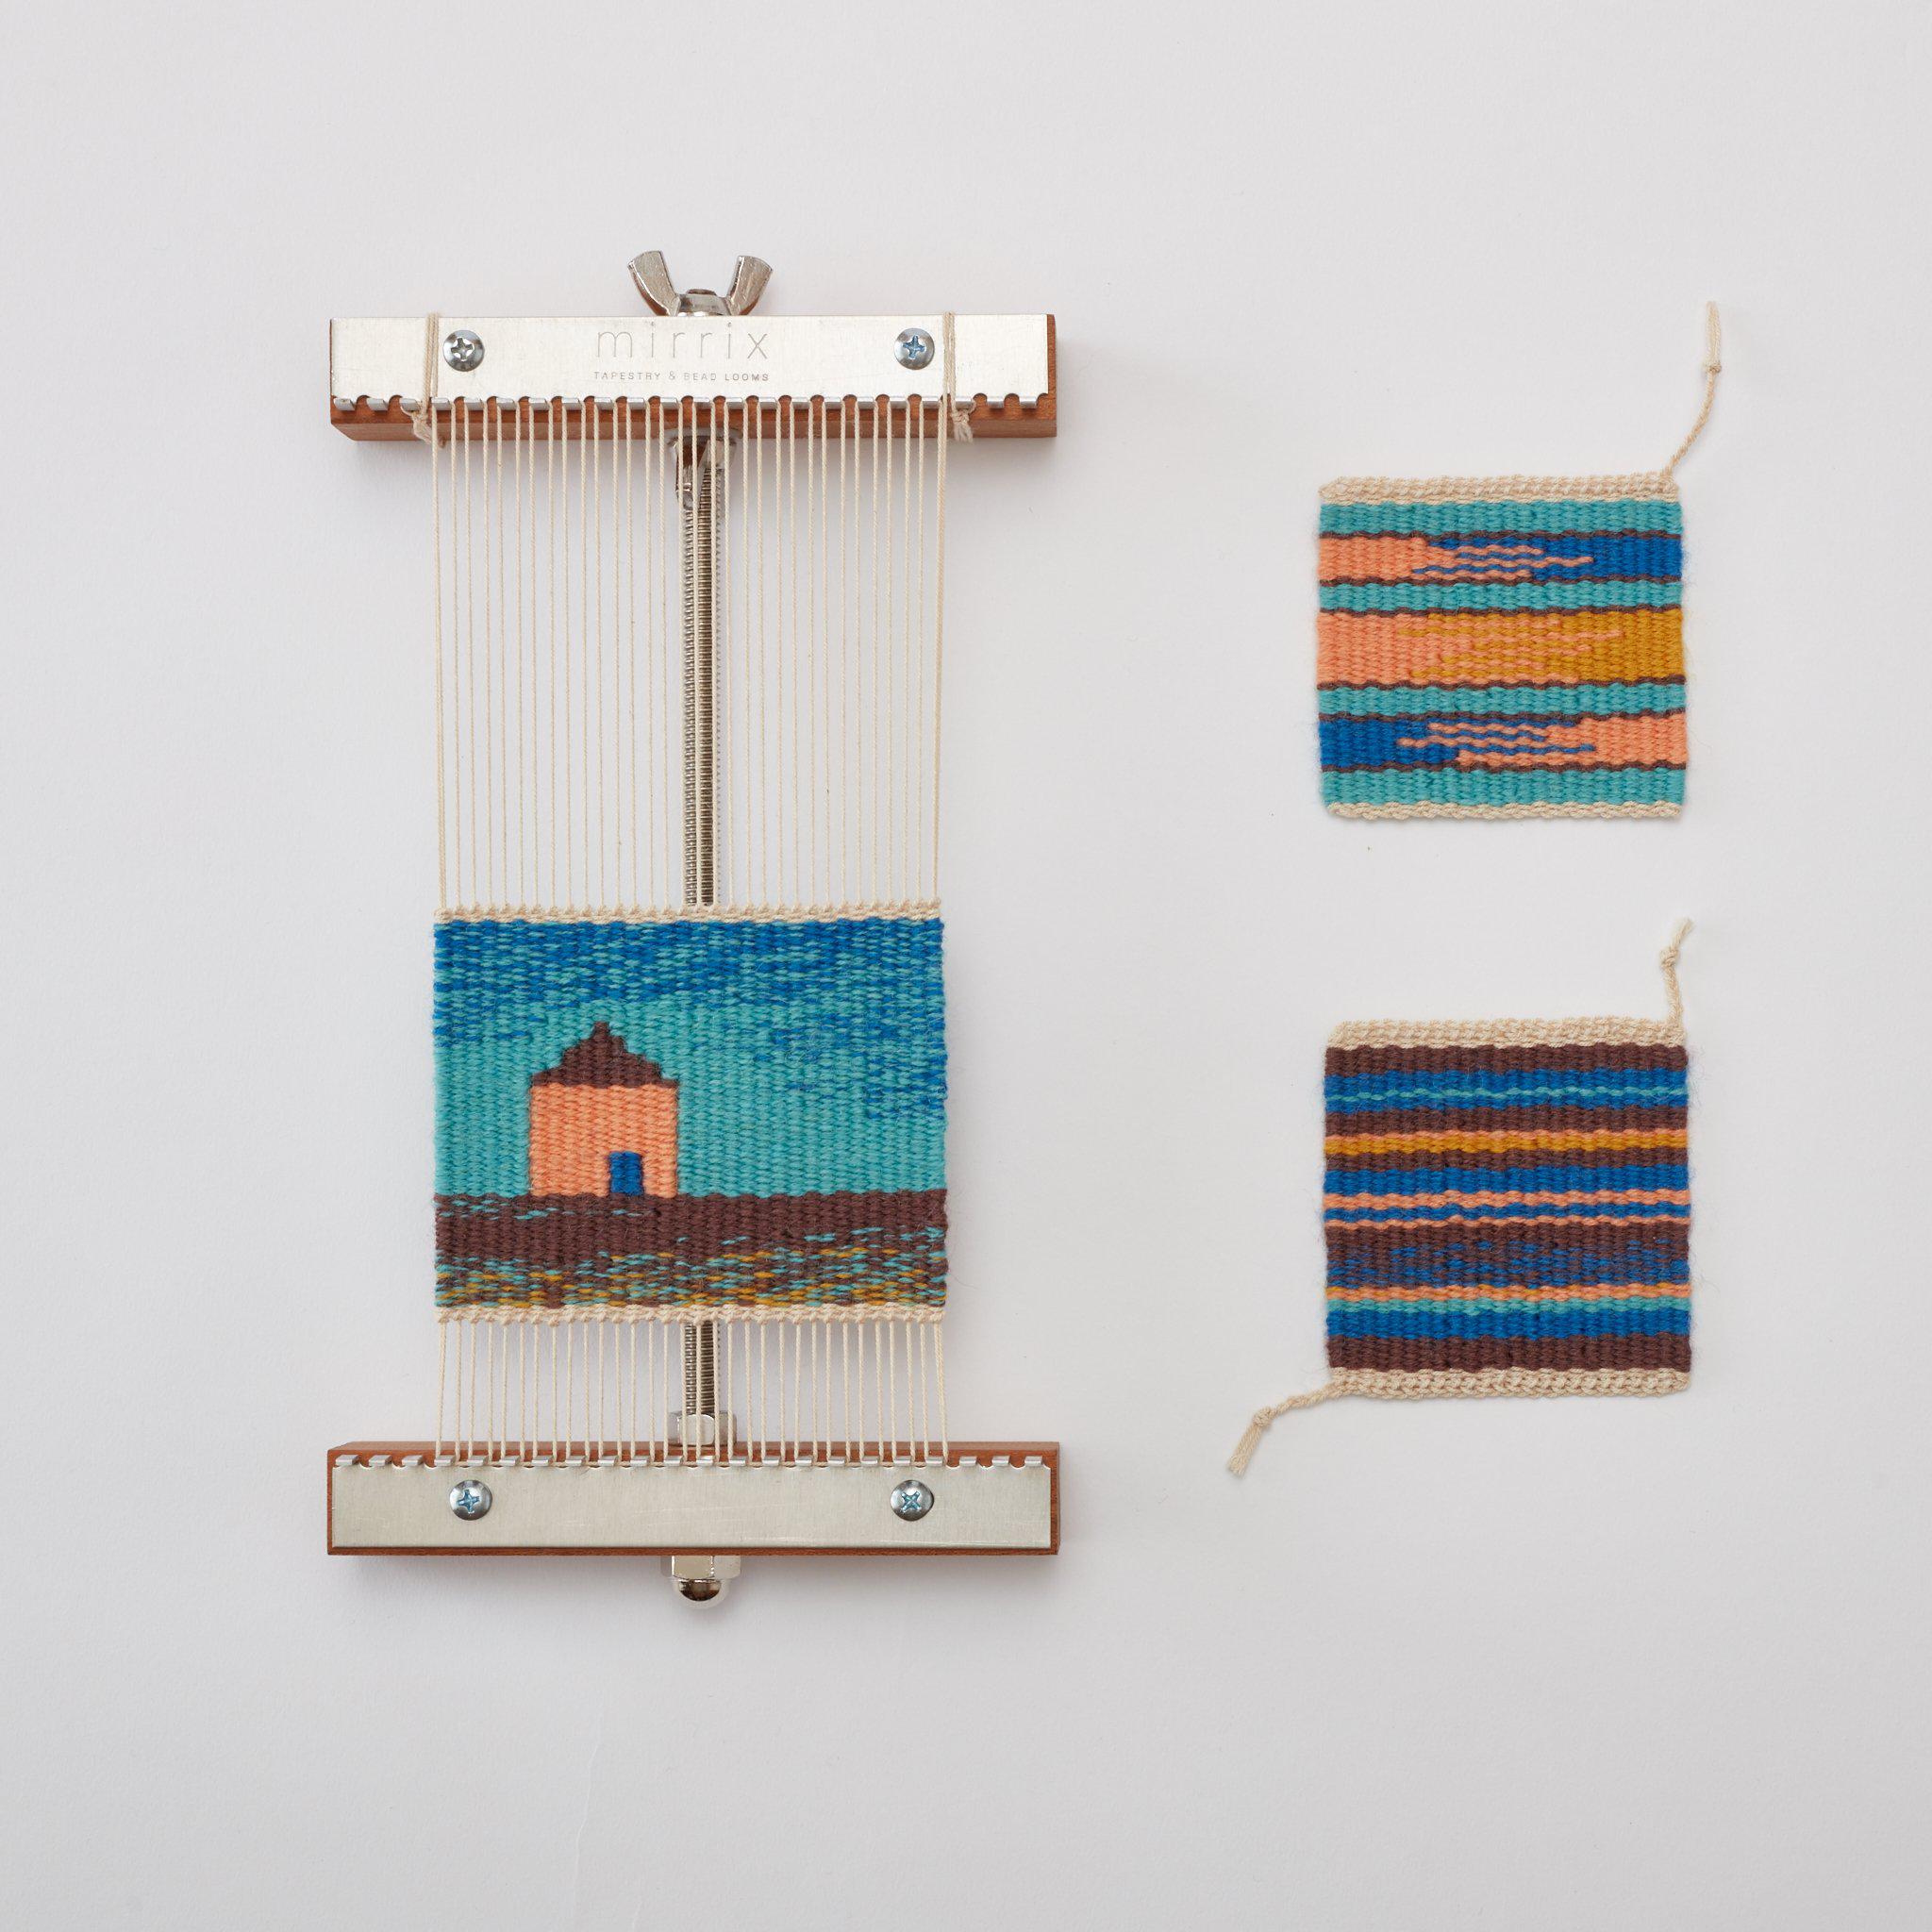 Weaving on a round knitting loom  Loom bands, Métier à tisser